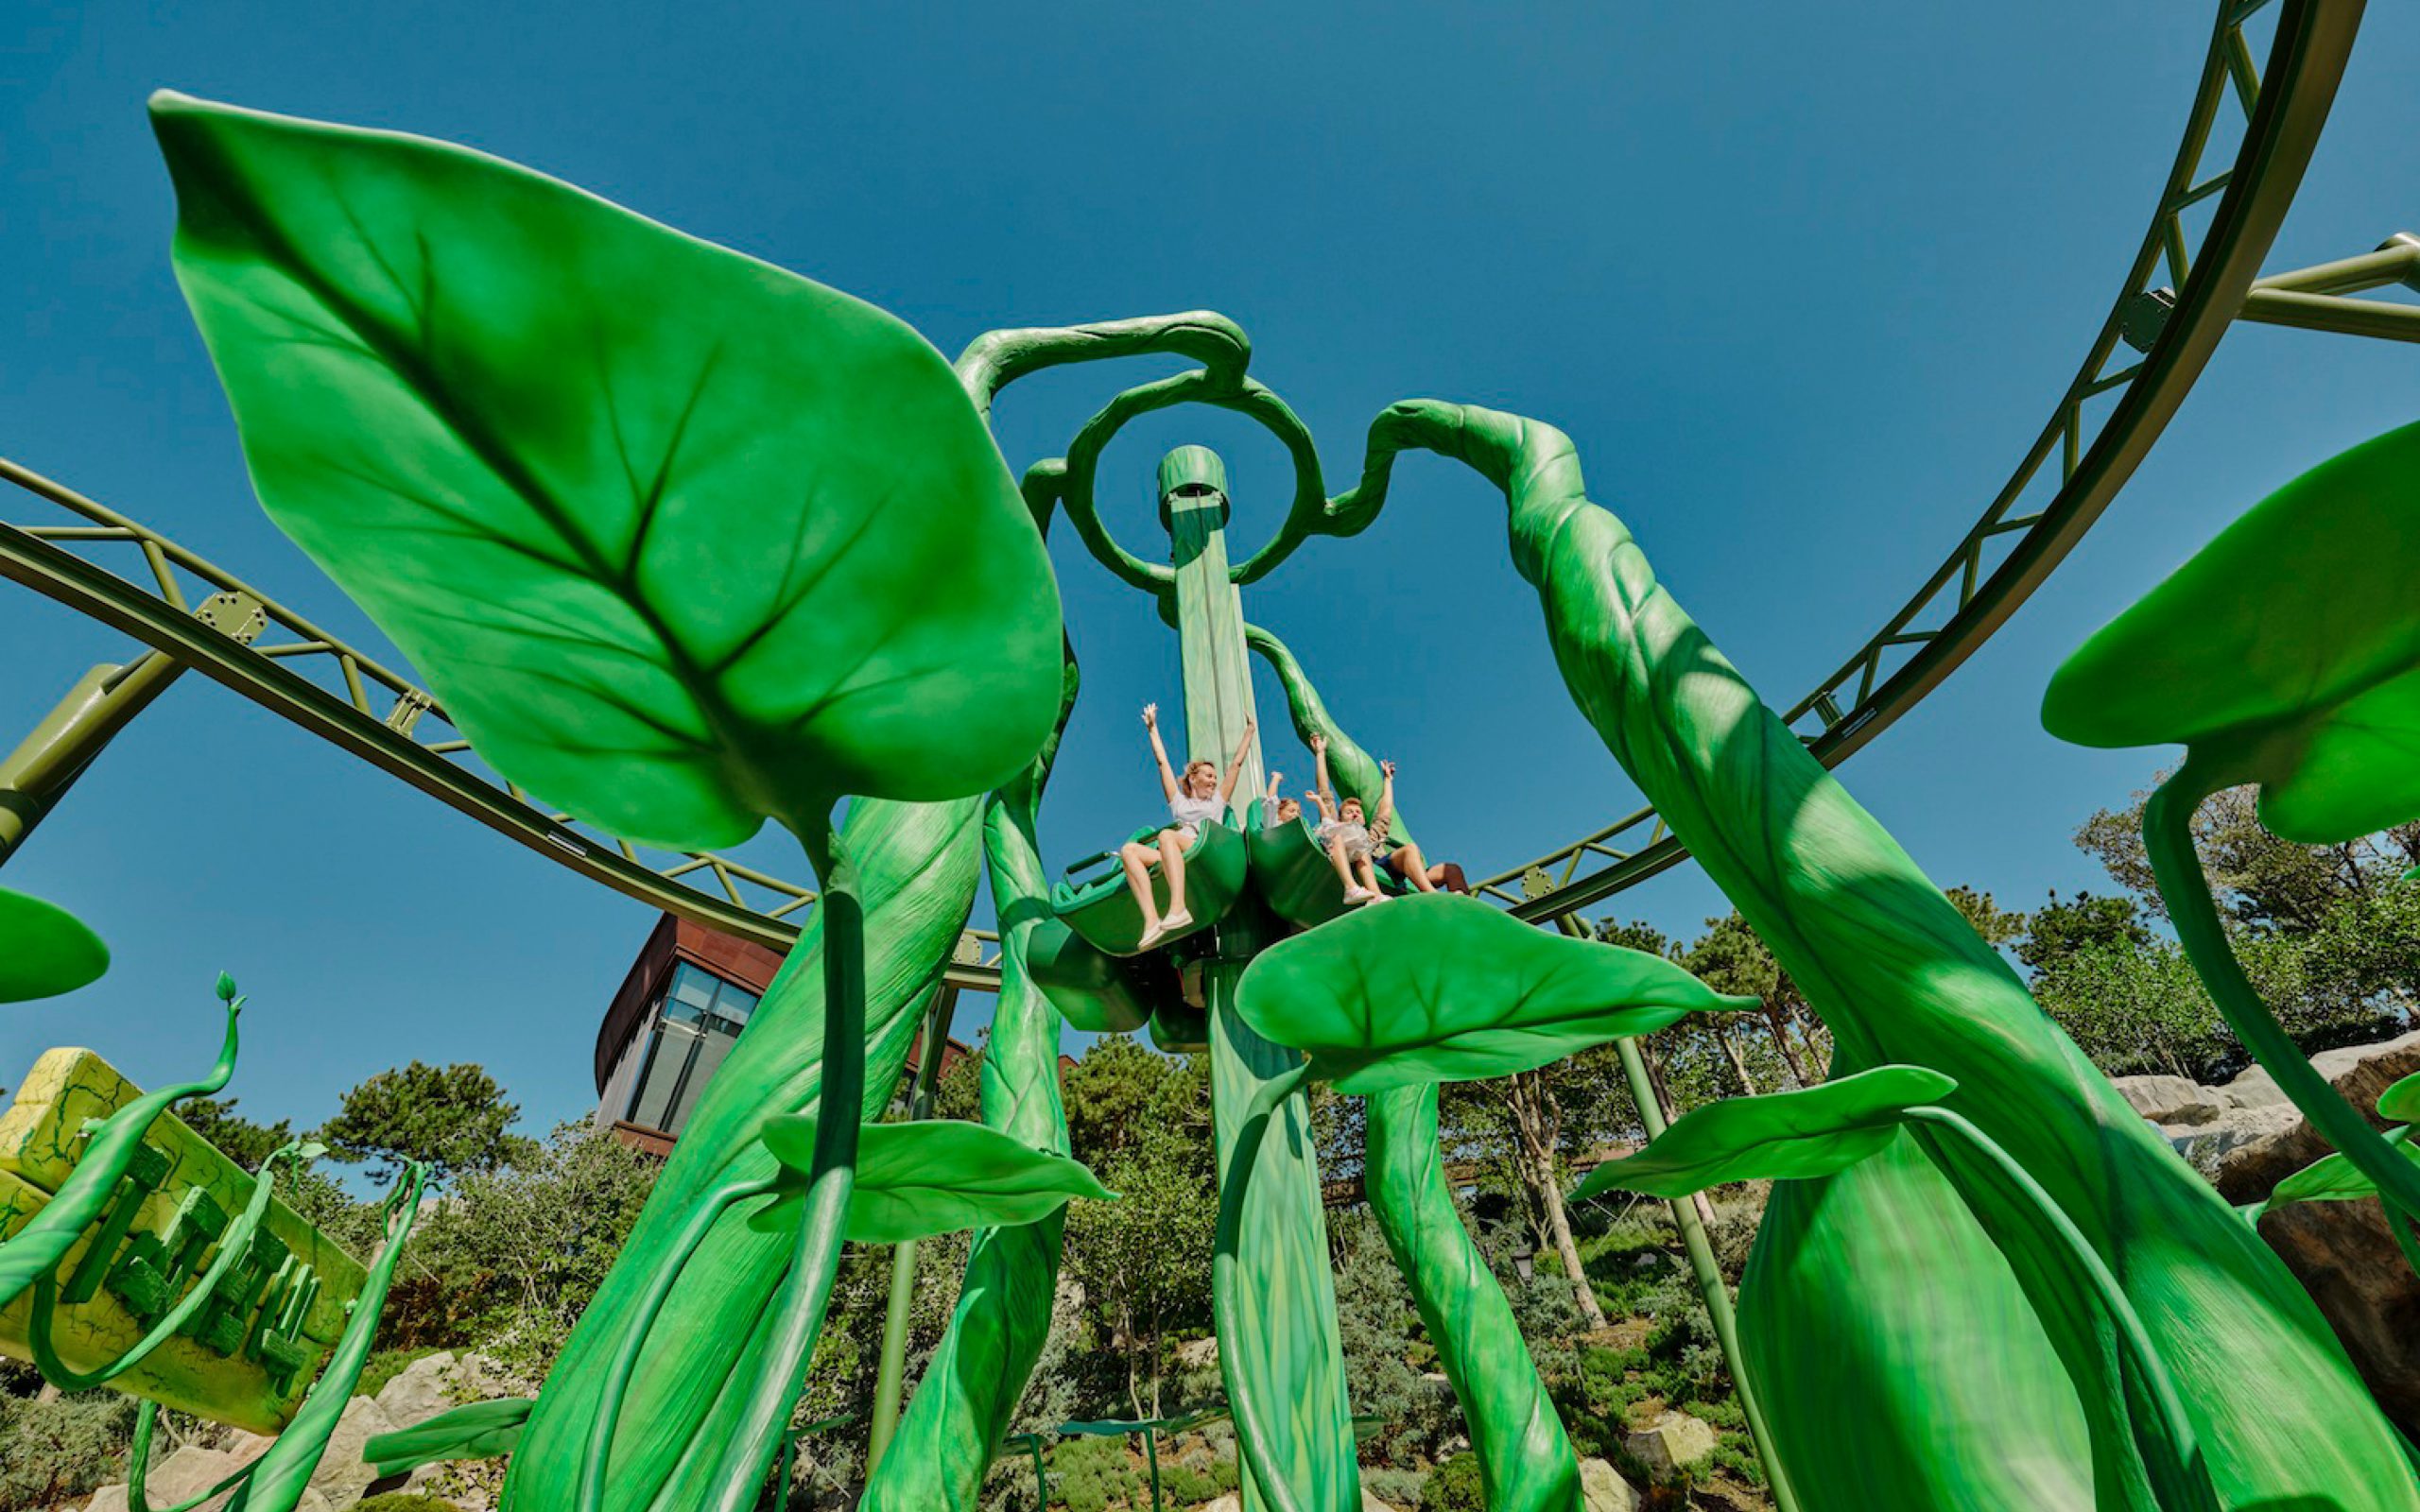 Green drop tower ride